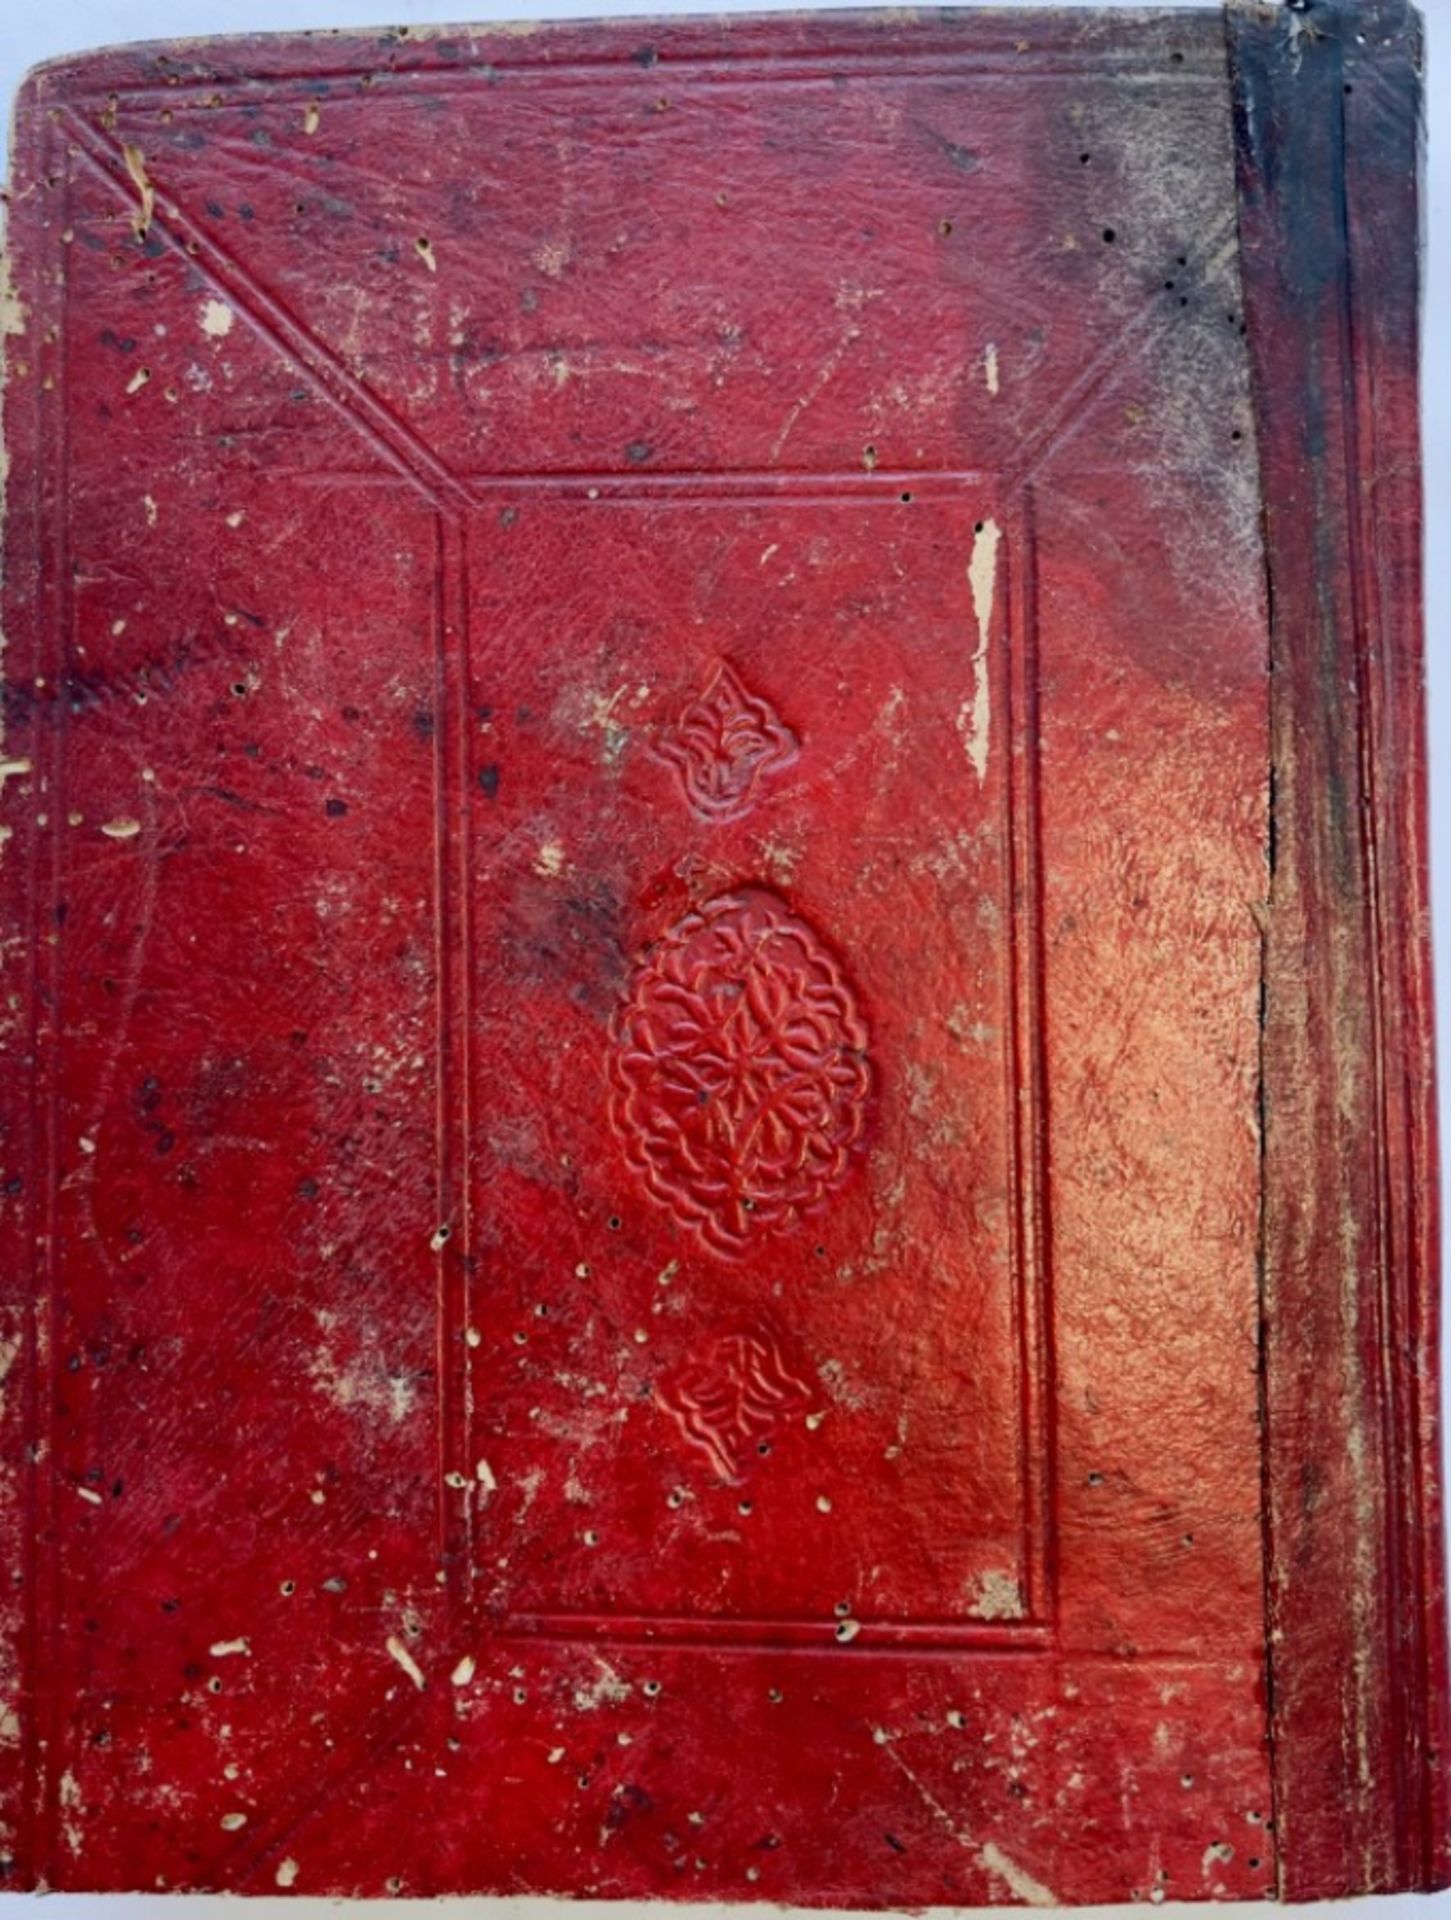 18th century North African Islamic manuscript - Image 20 of 21